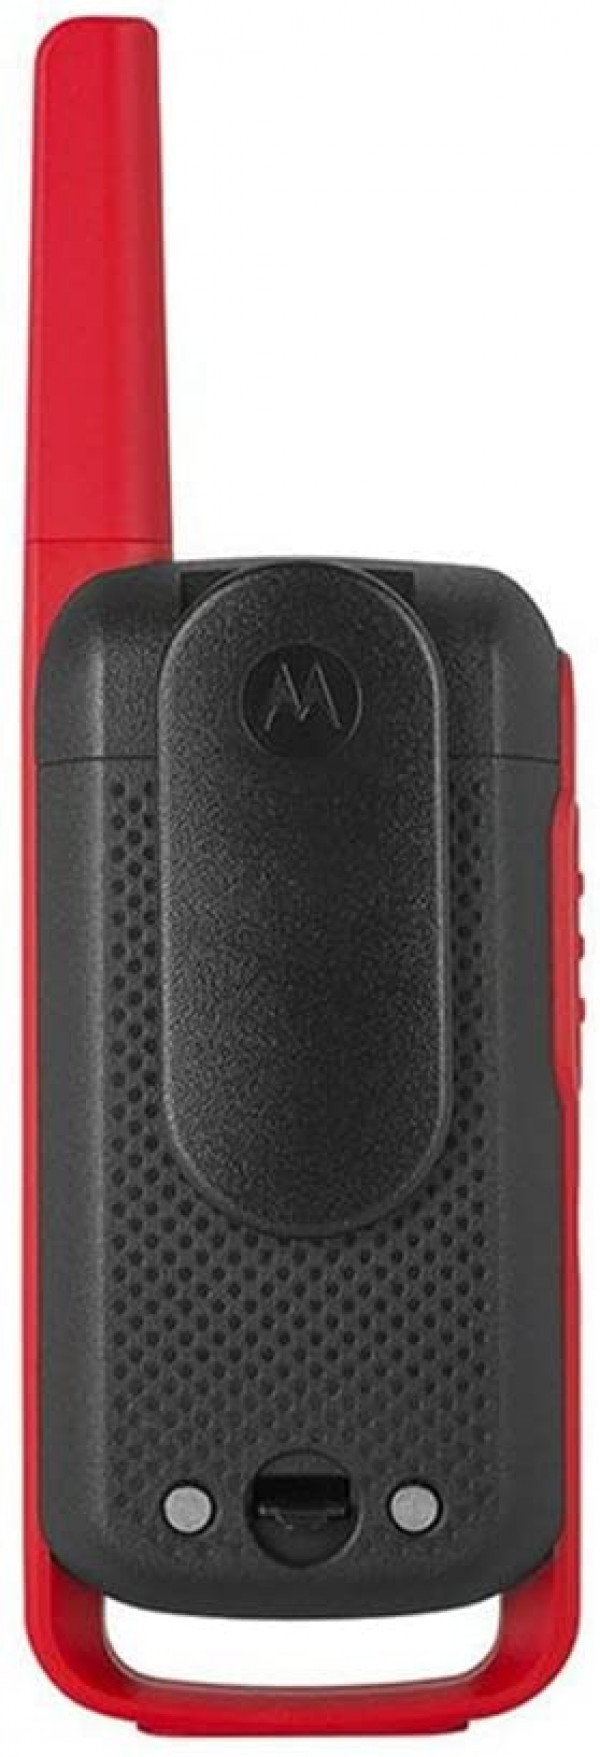 Motorola PMR T62 Red 9835MF